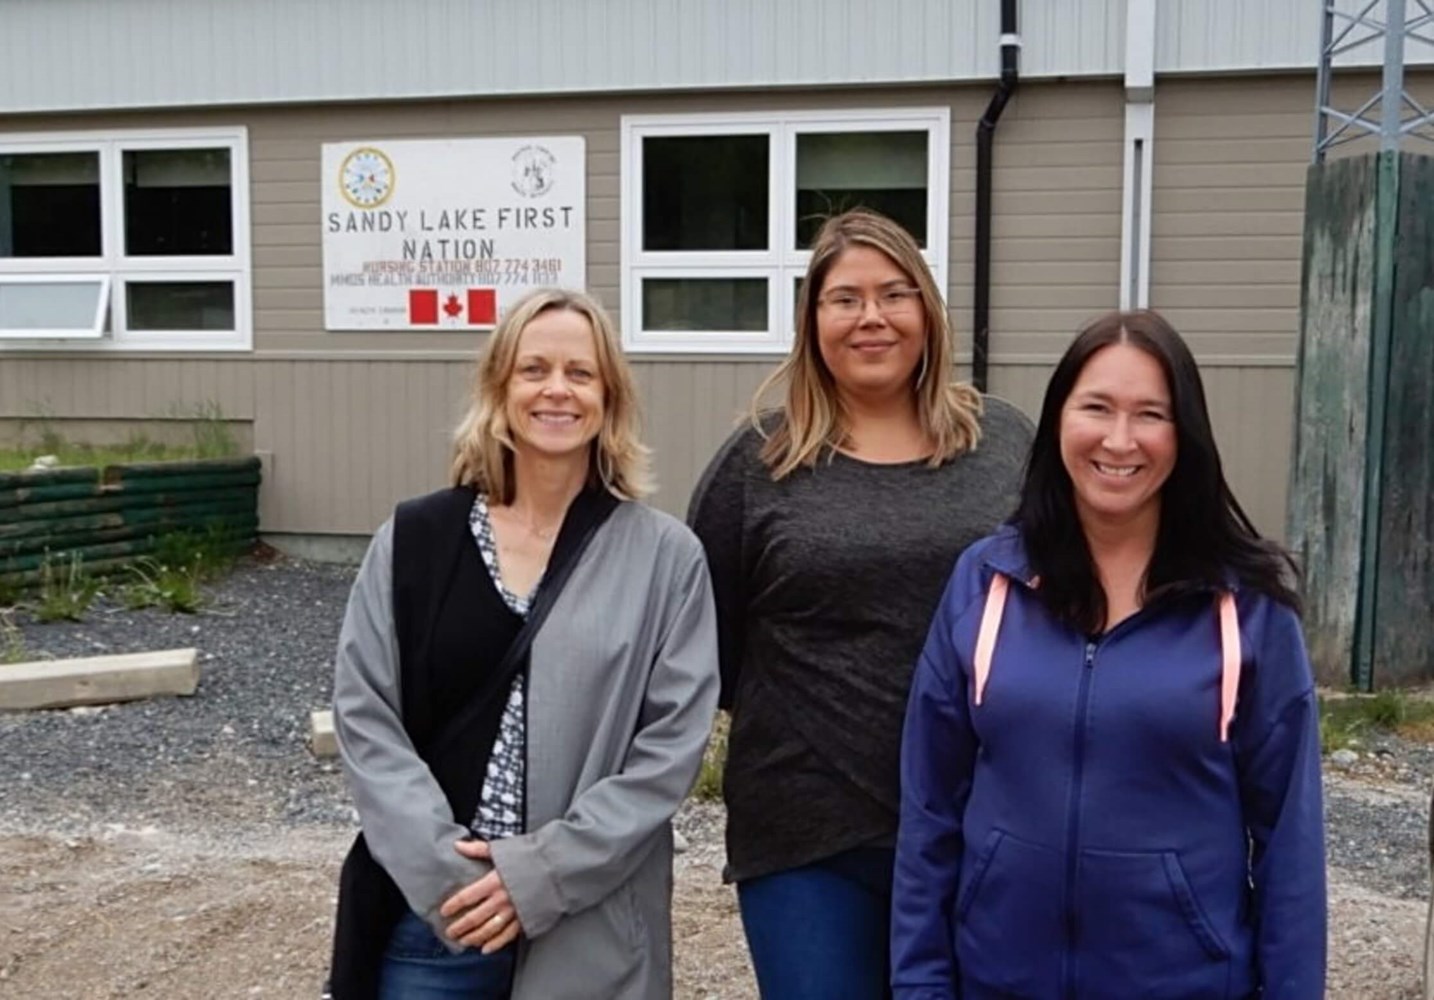 Dr. Samantha Wells, Krystine Abel and Dr. Renee Linklater outside the nursing station in Sandy Lake First Nation